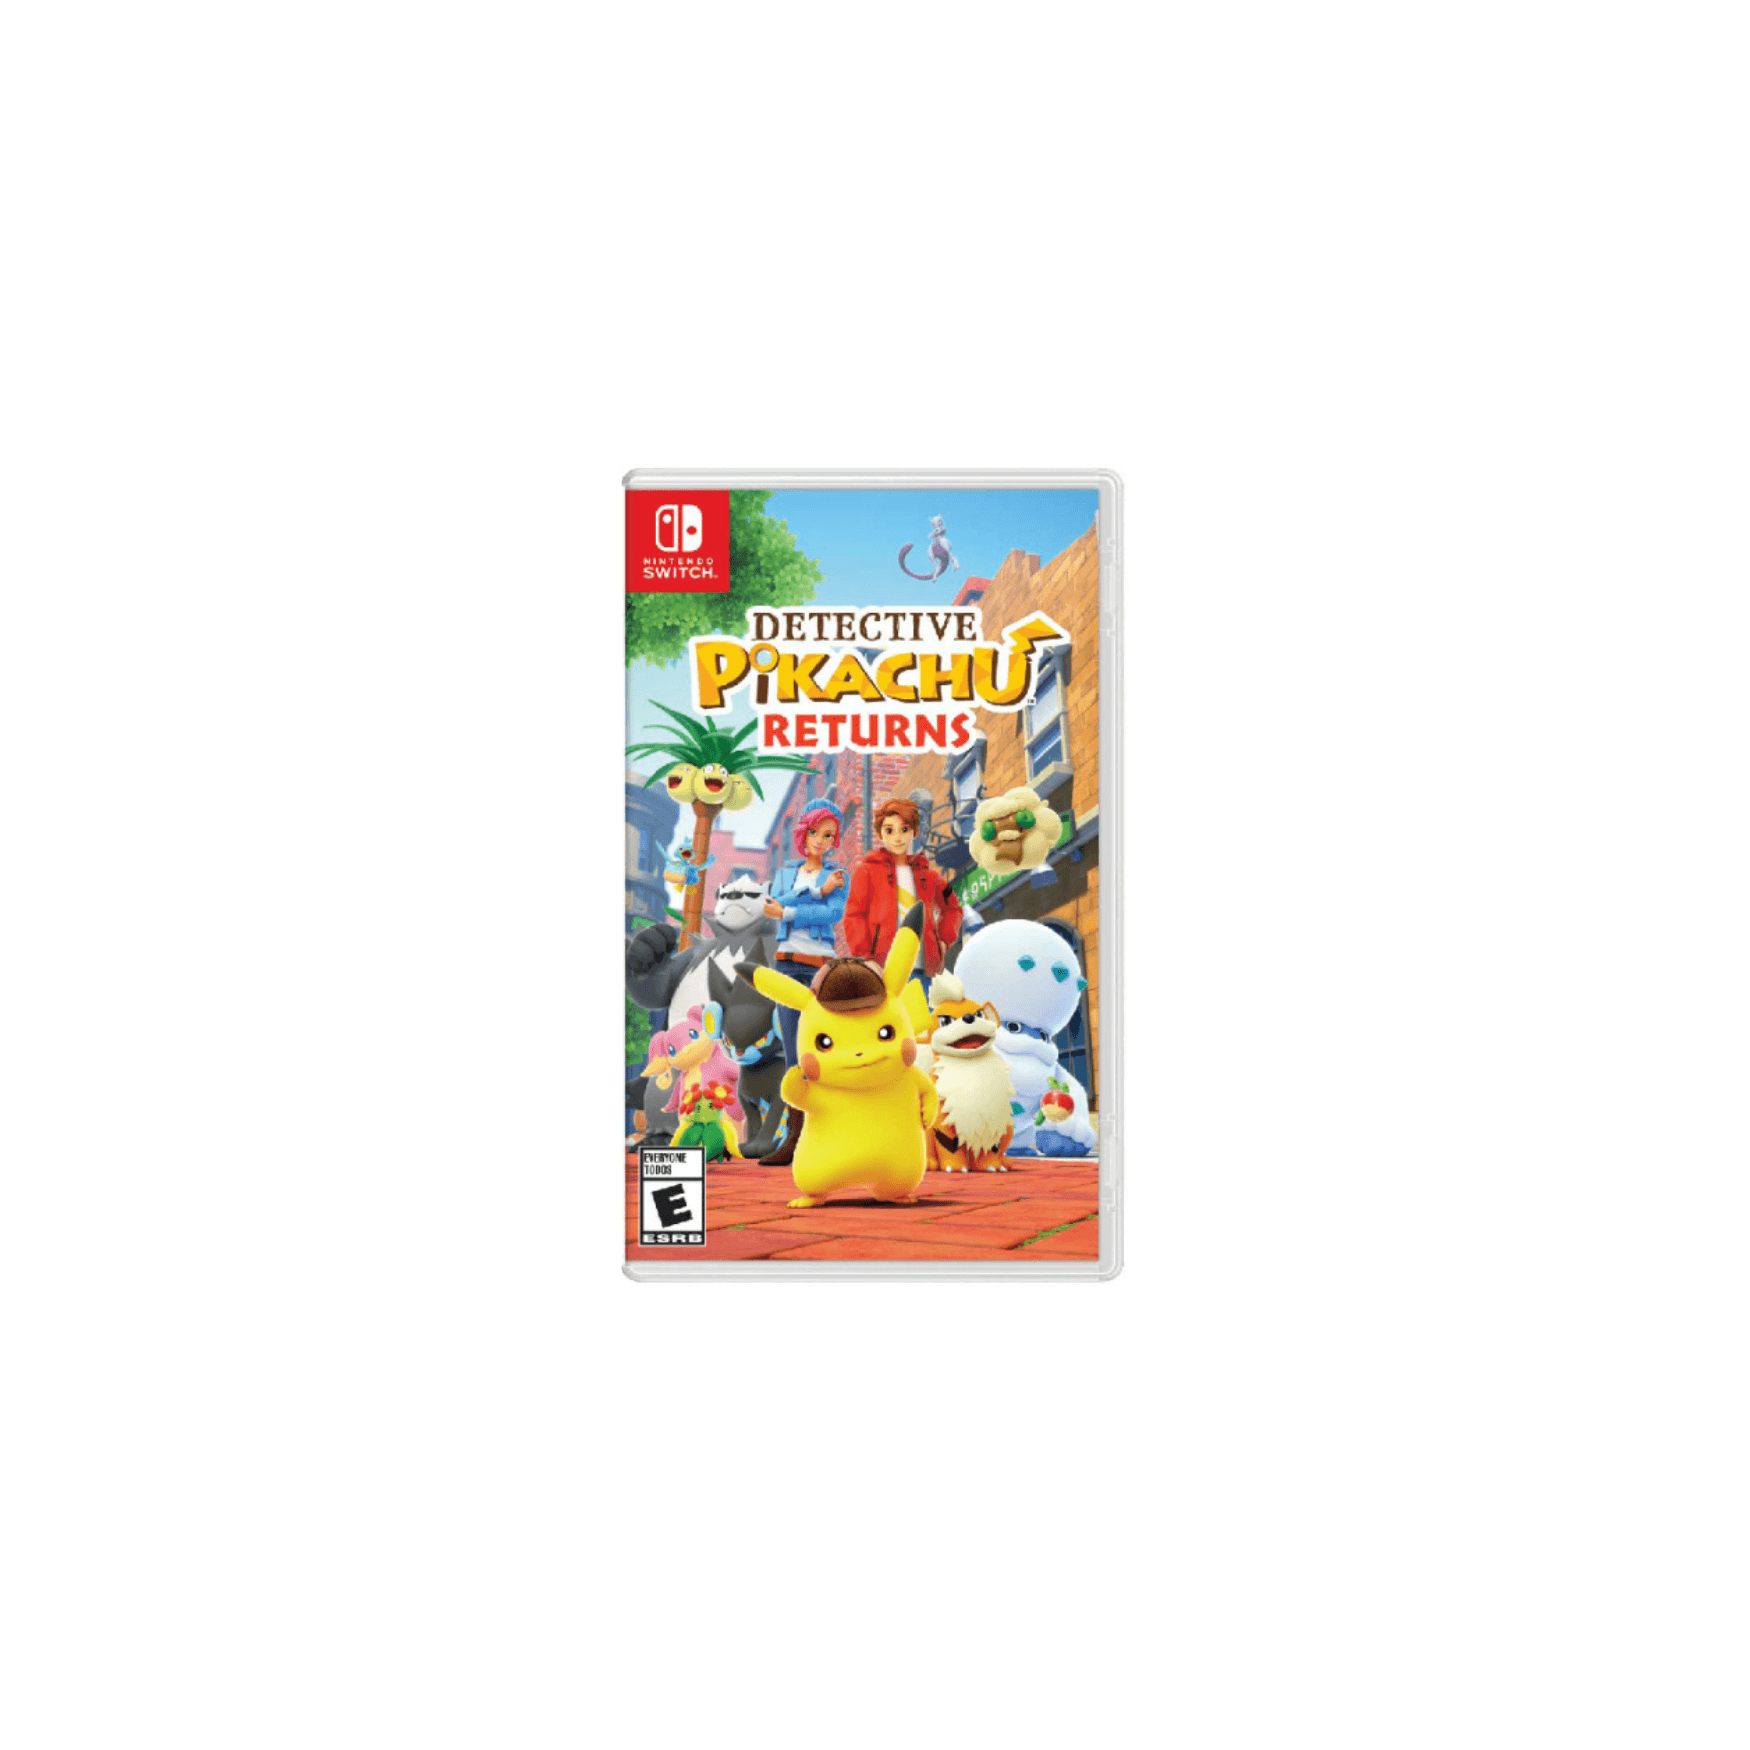 Nintendo Switch Game Detective Pikachu Returns - for Nintendo Switch